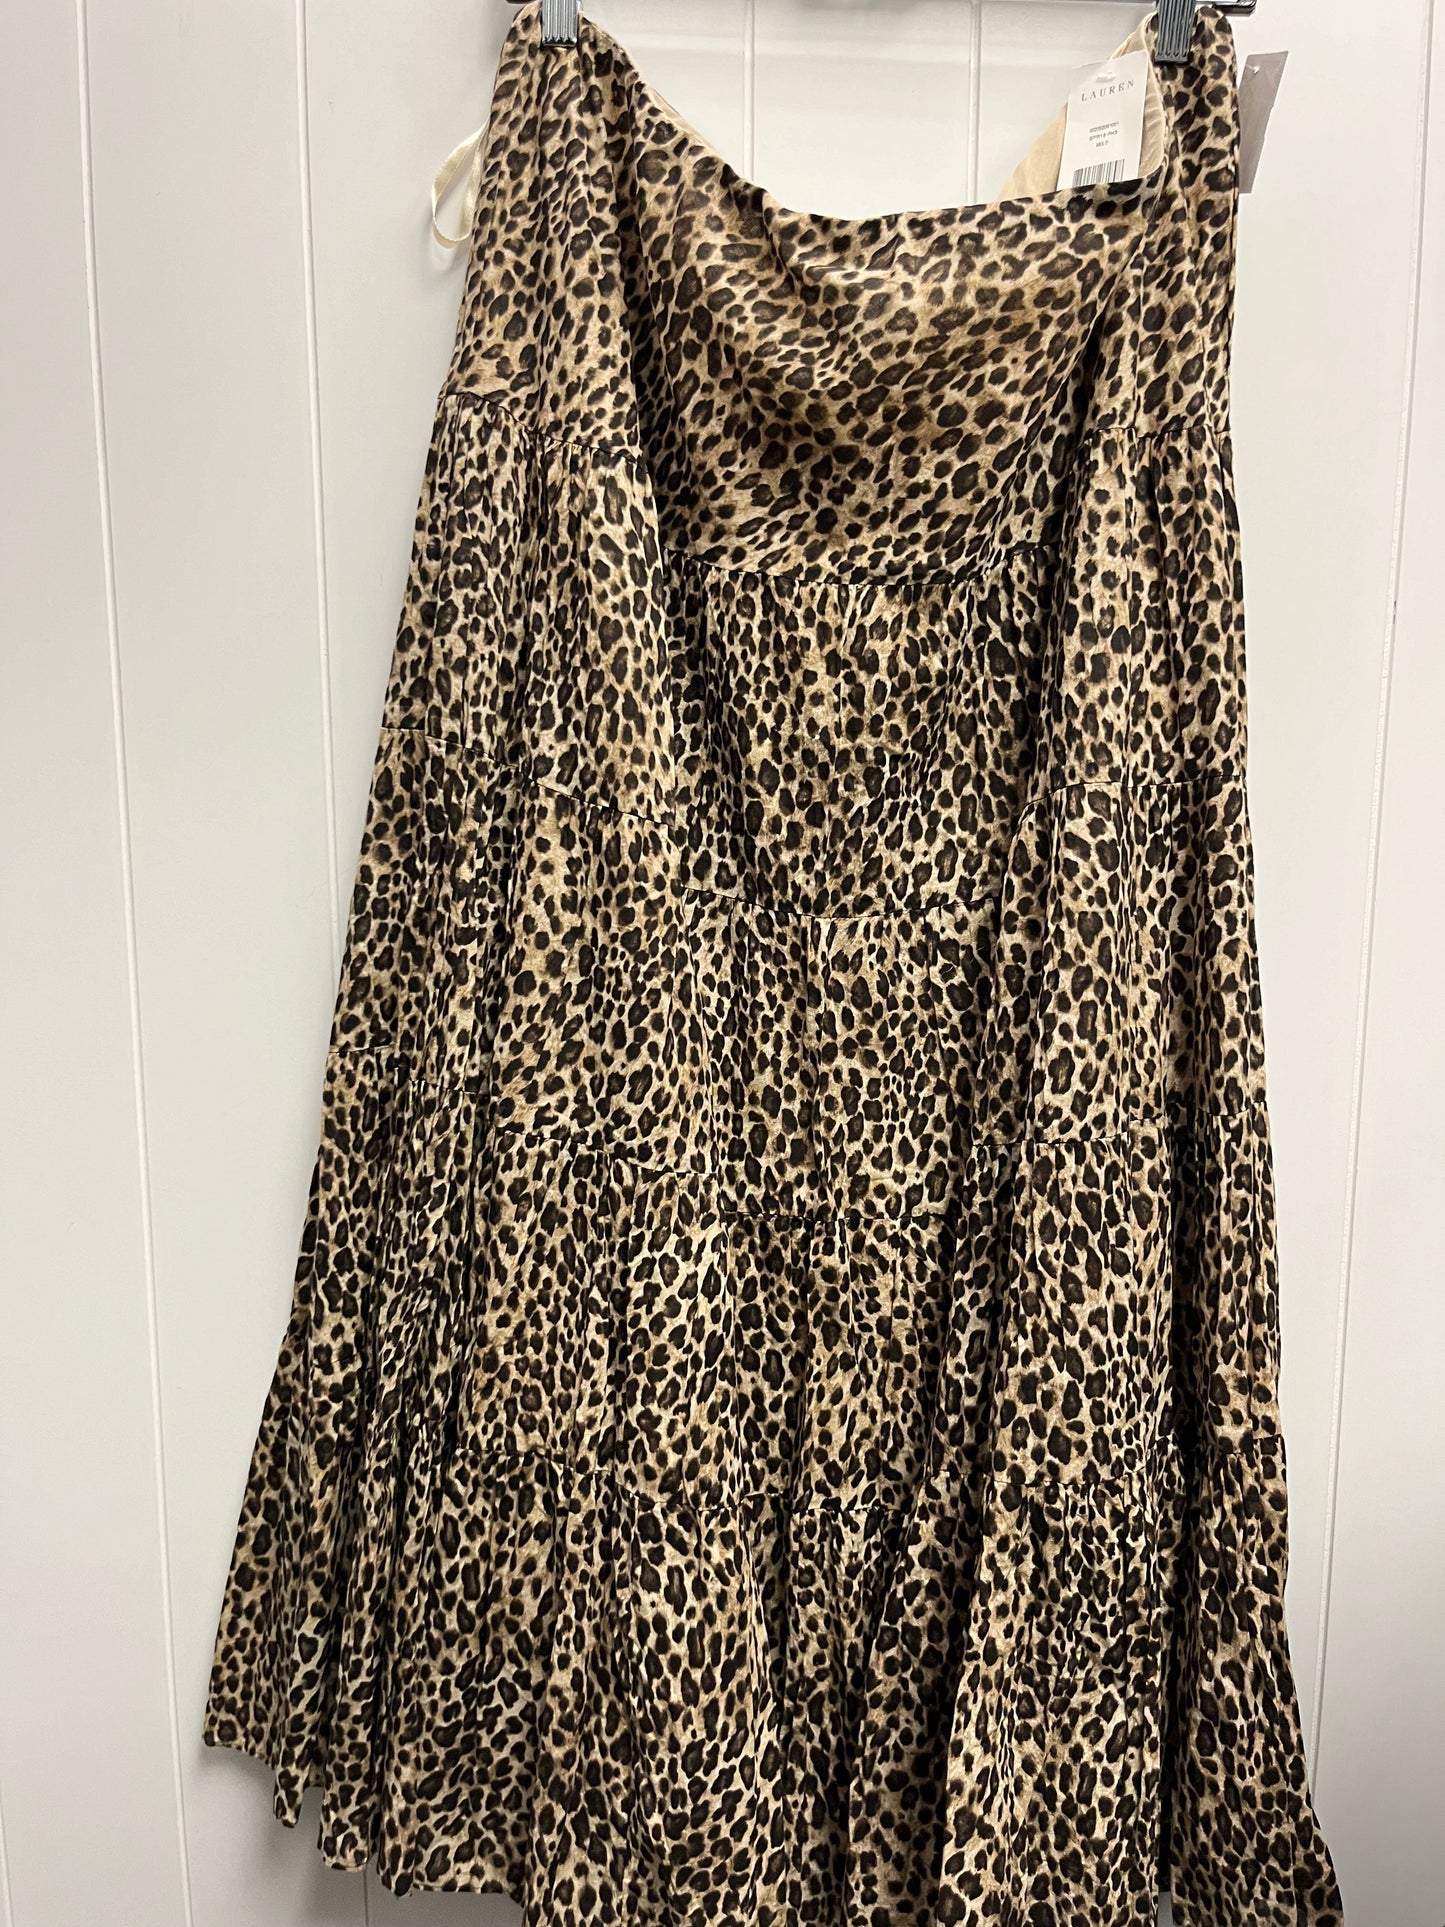 Animal Print Skirt Maxi Ralph Lauren, Size 2x